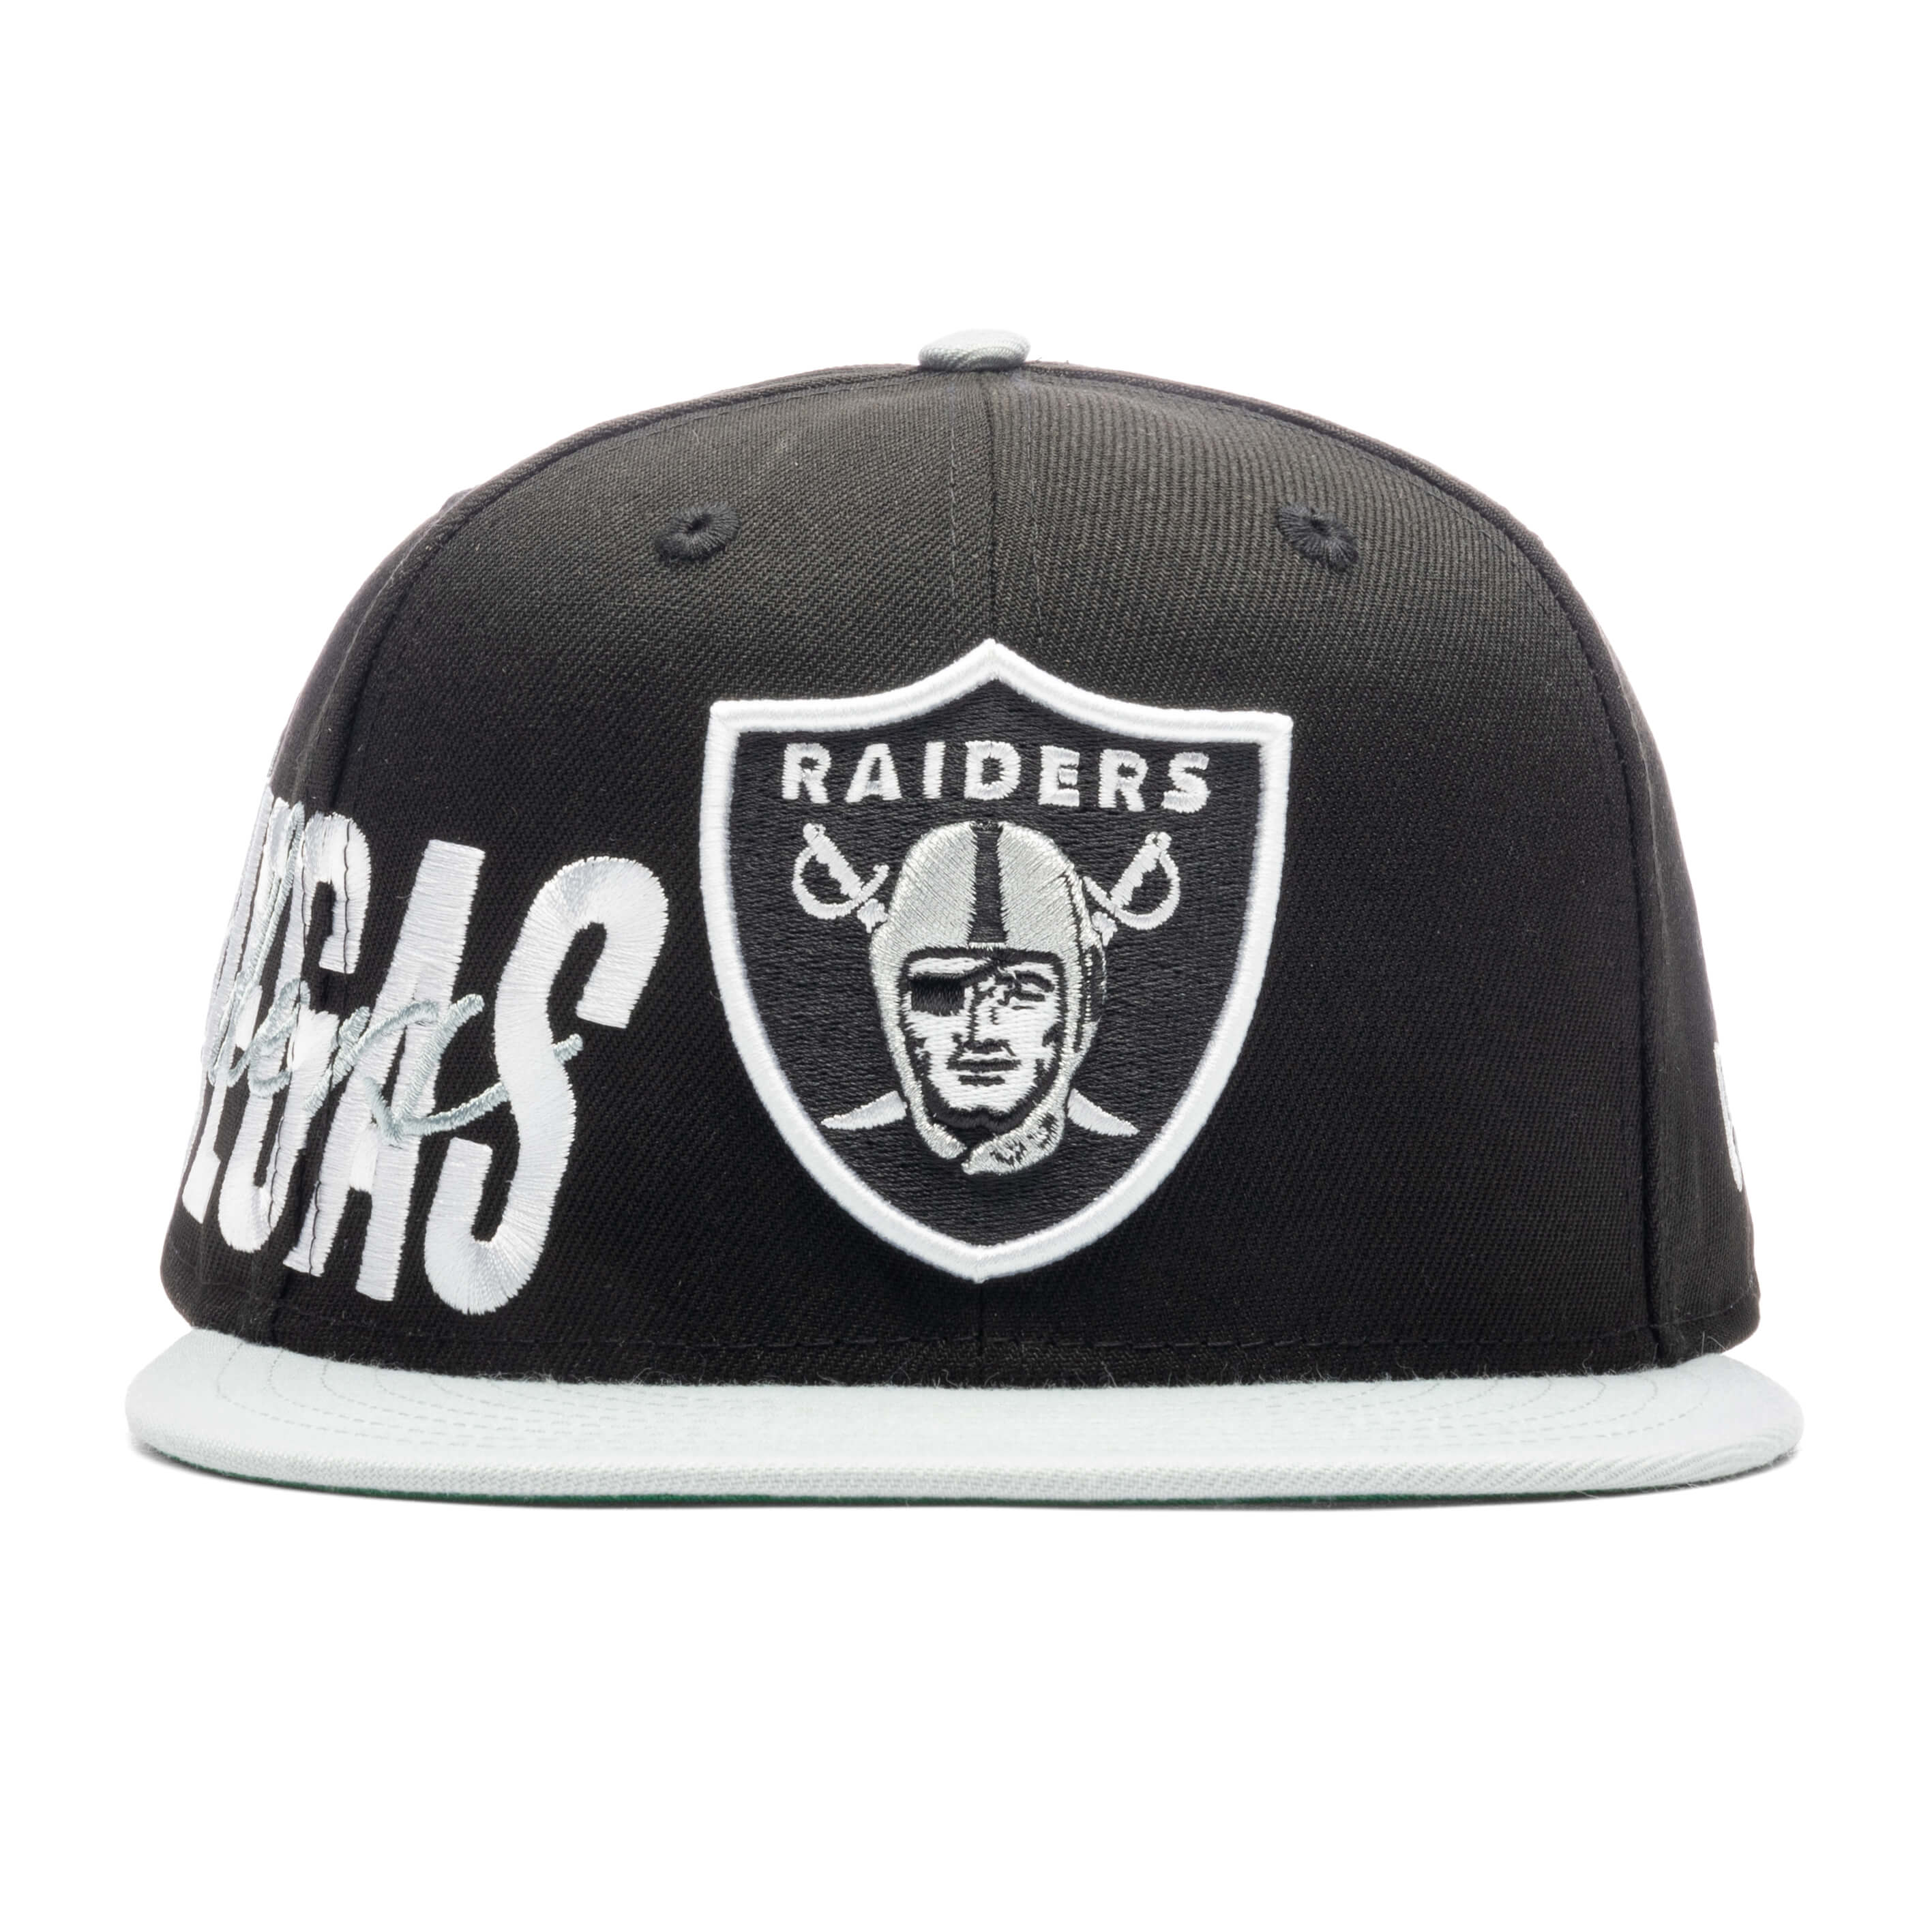 New Era Las Vegas Raiders Black Basic 9FIFTY Adjustable Snapback Hat Black/Grey / Os